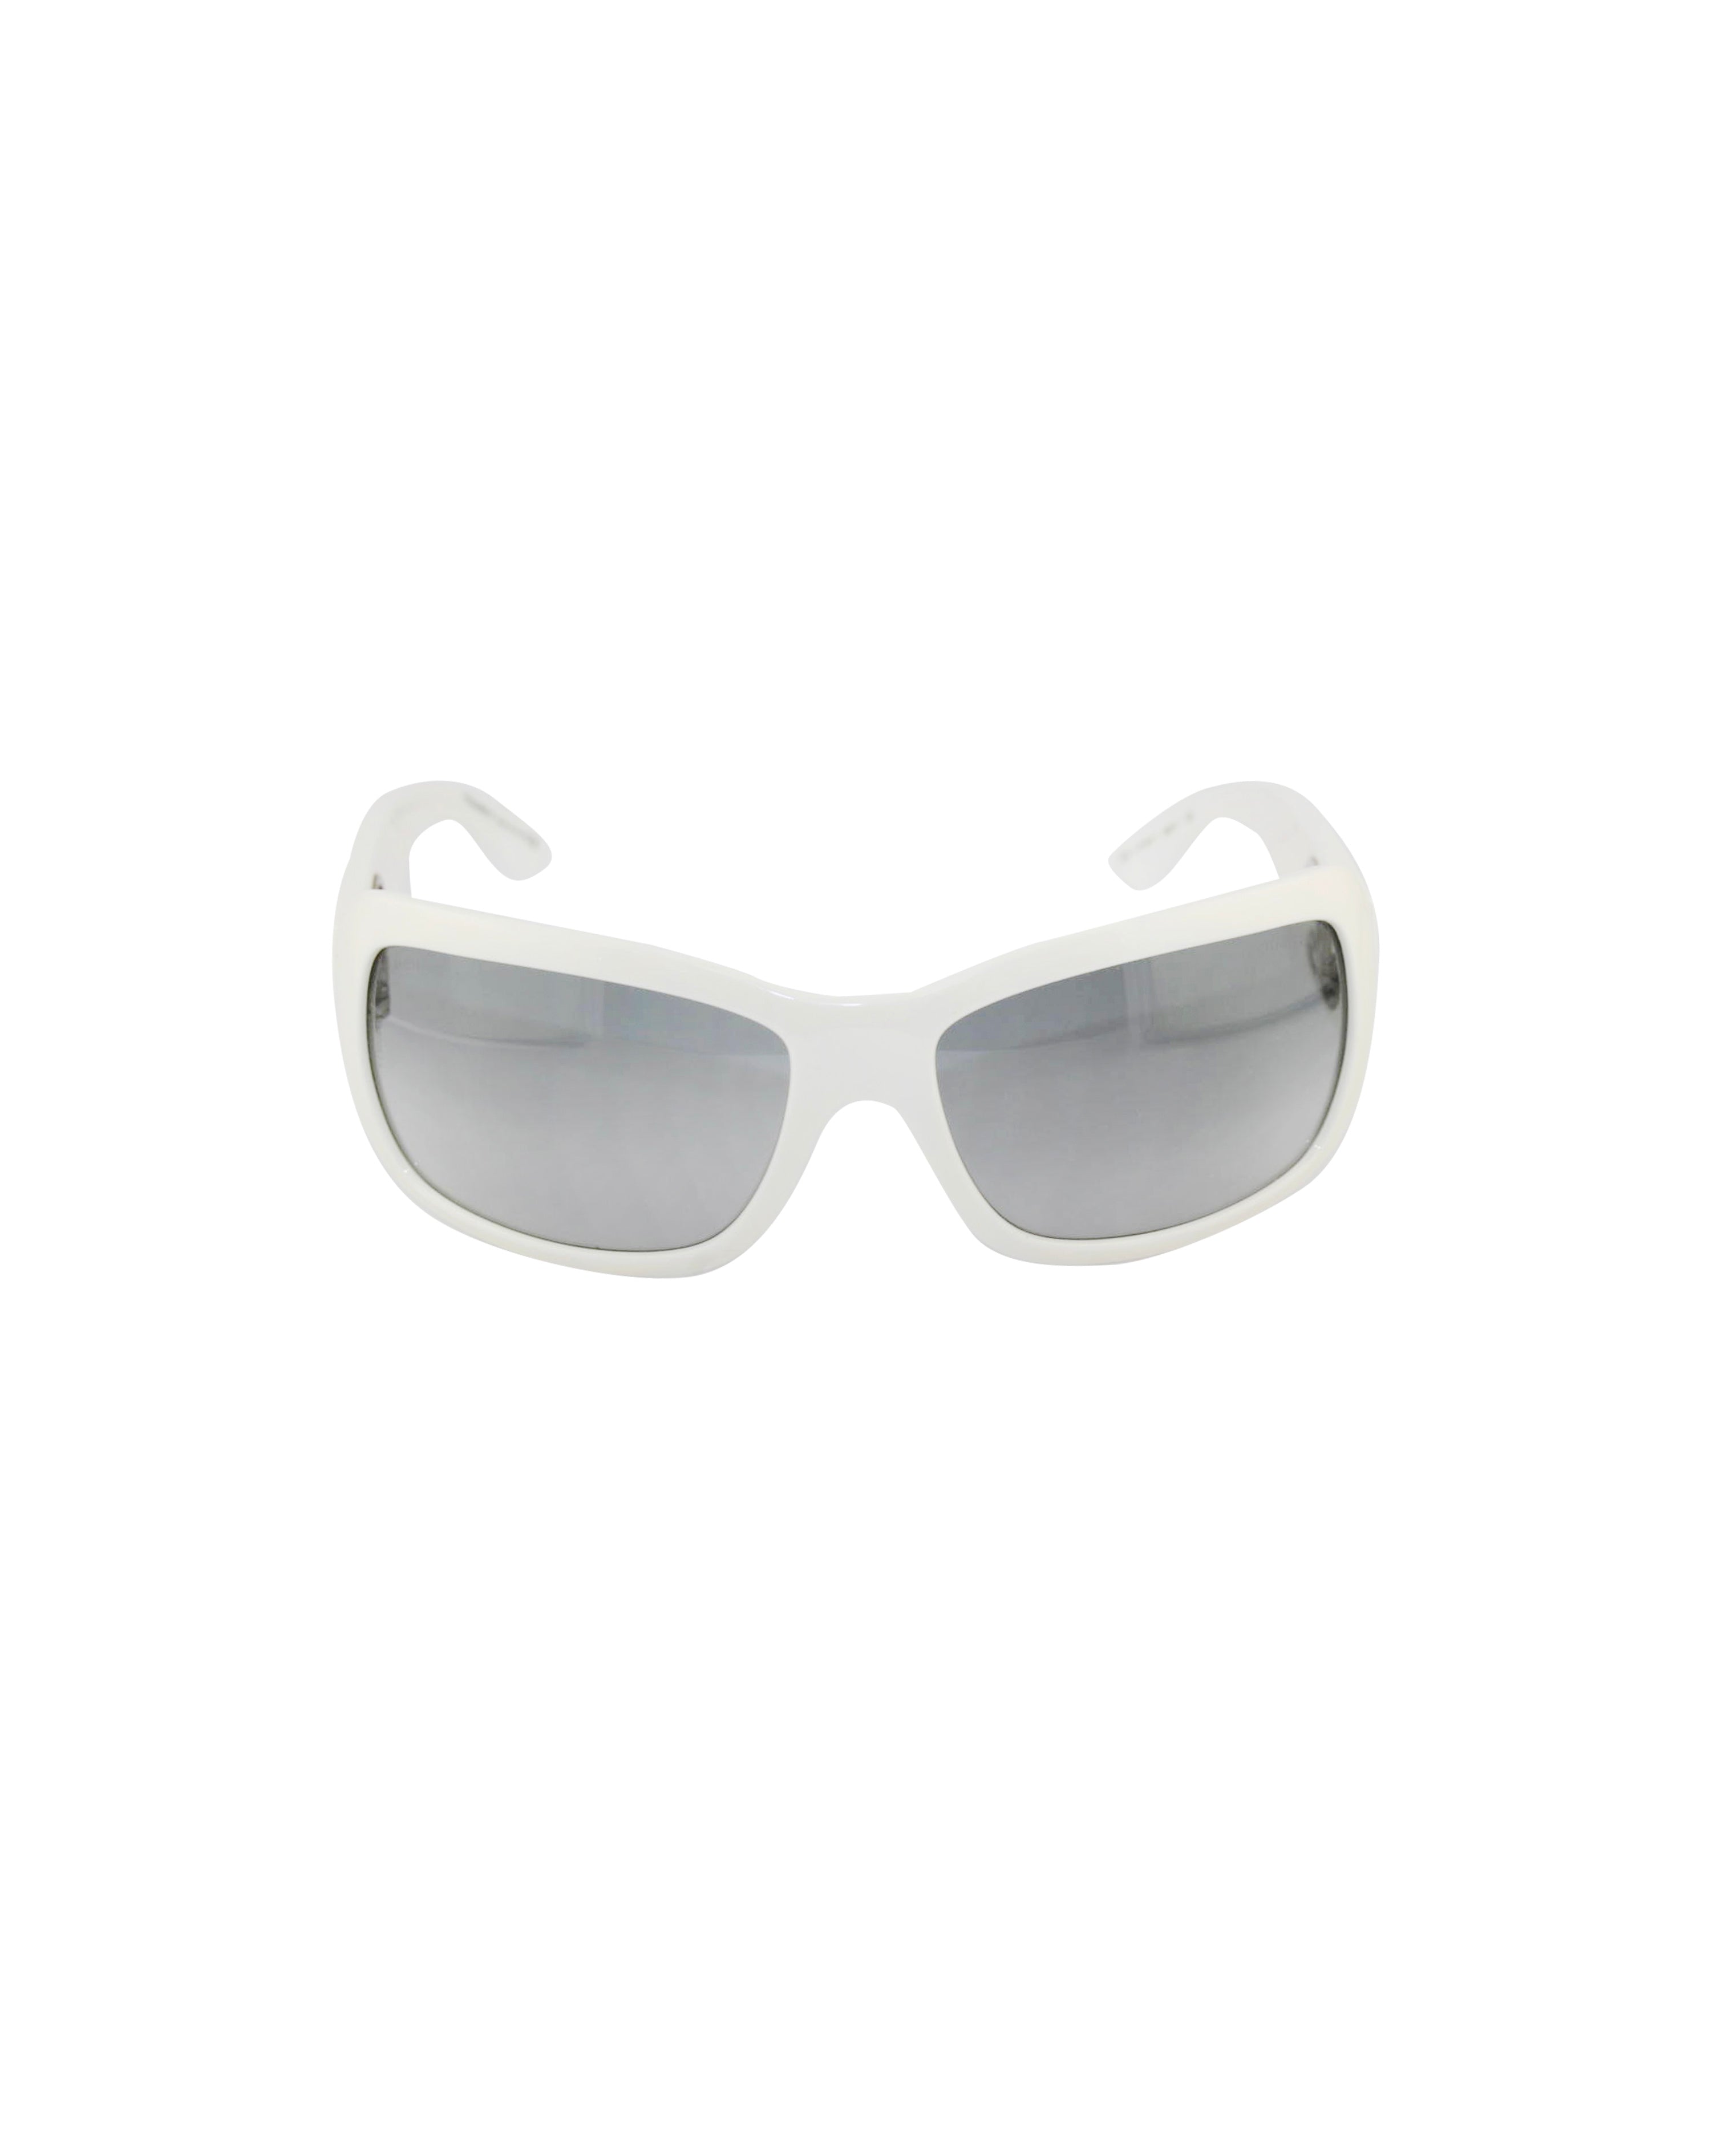 CHANEL Sunglasses Vintage Rare Silver Oval Rectangular Square 